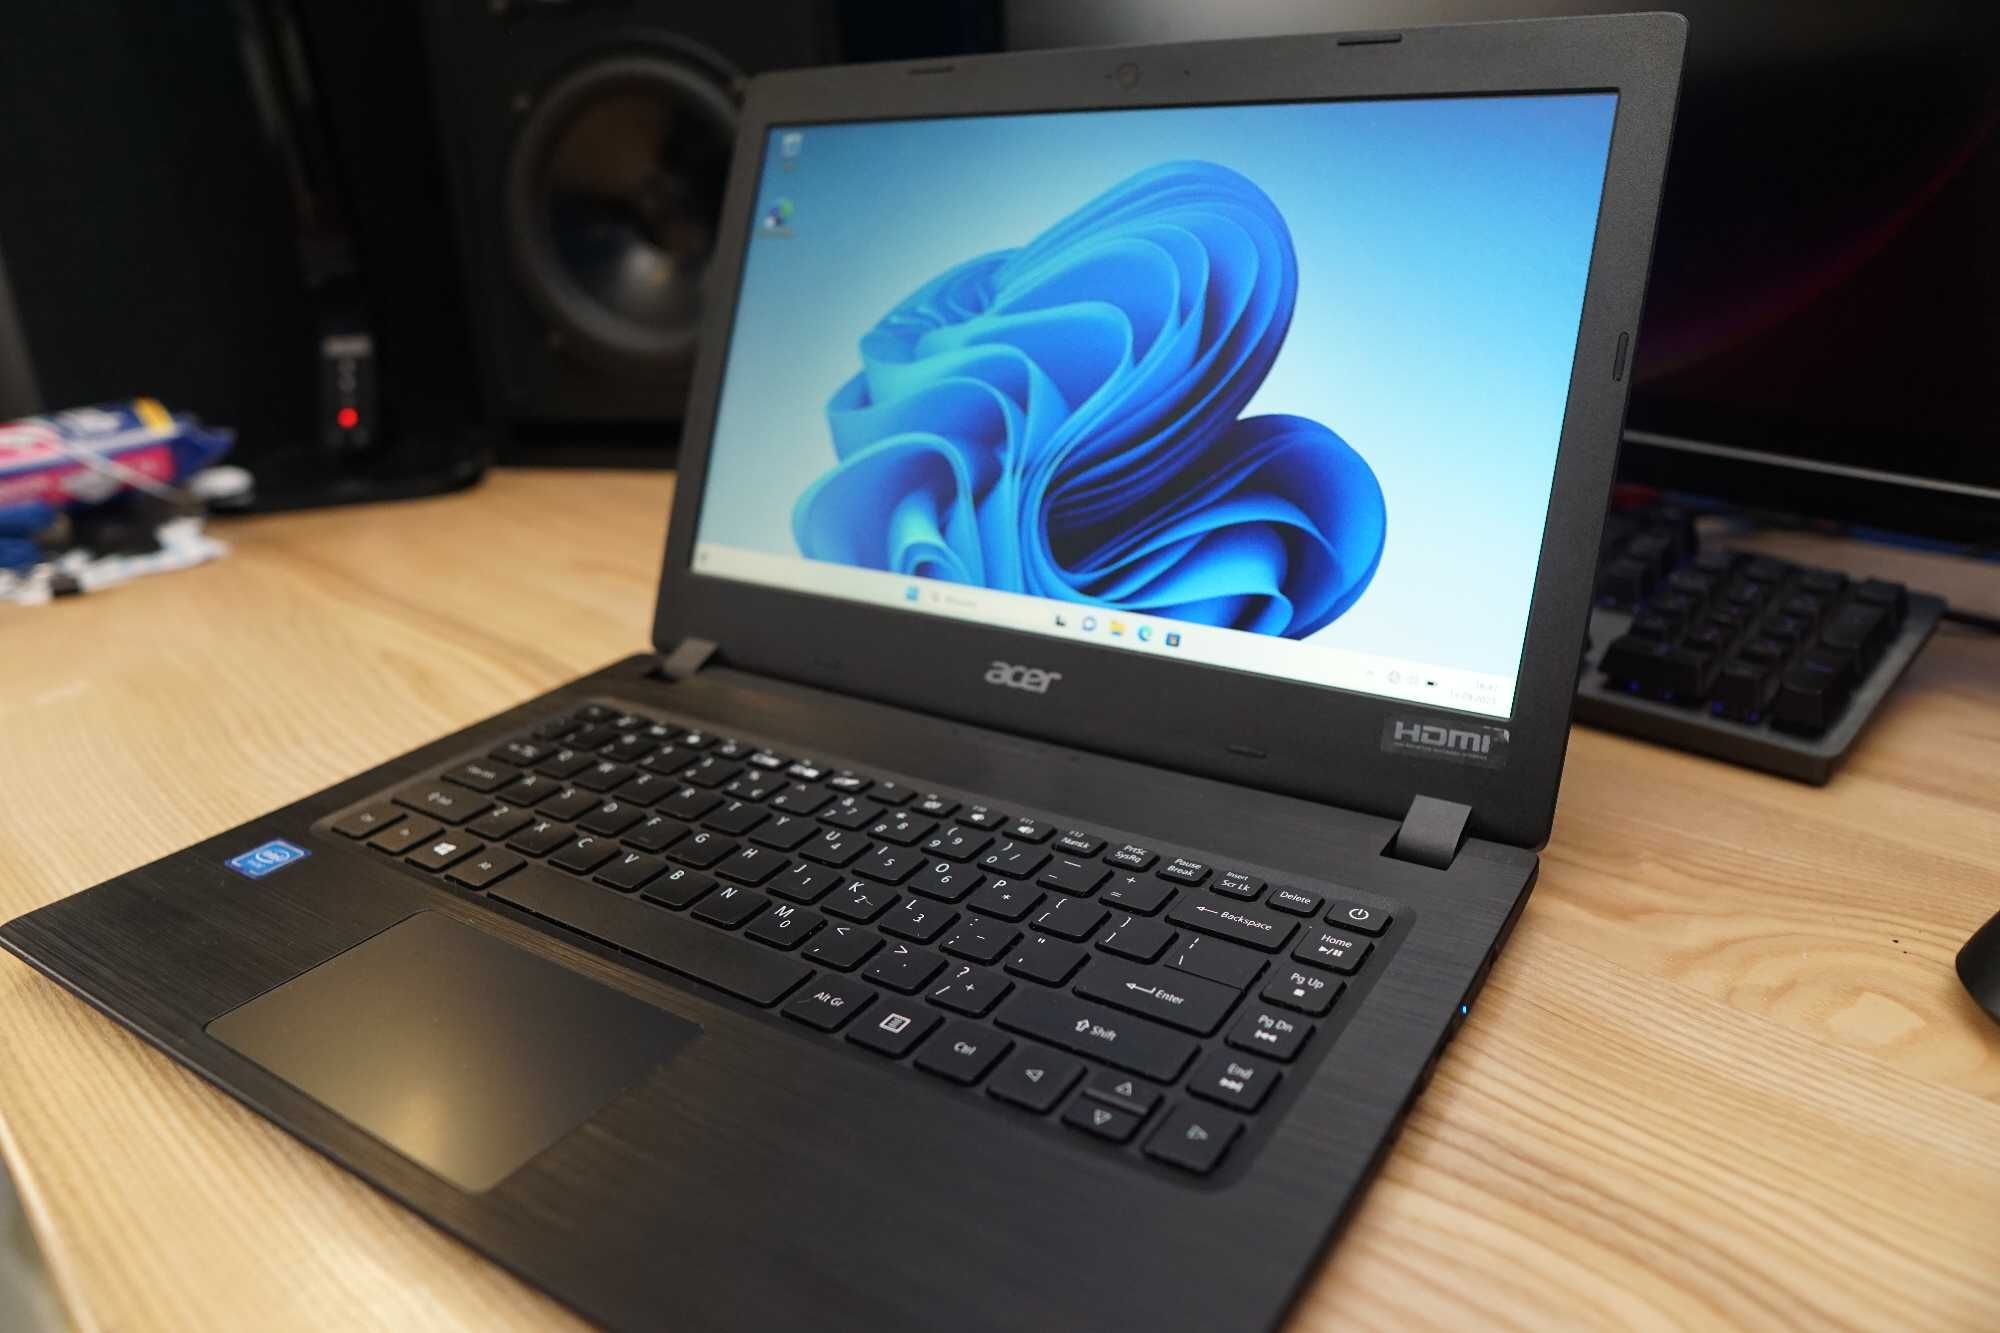 Laptop Acer a314-32 8gb ram, 256gb SSD, windows 11. bat 4h 14 cali